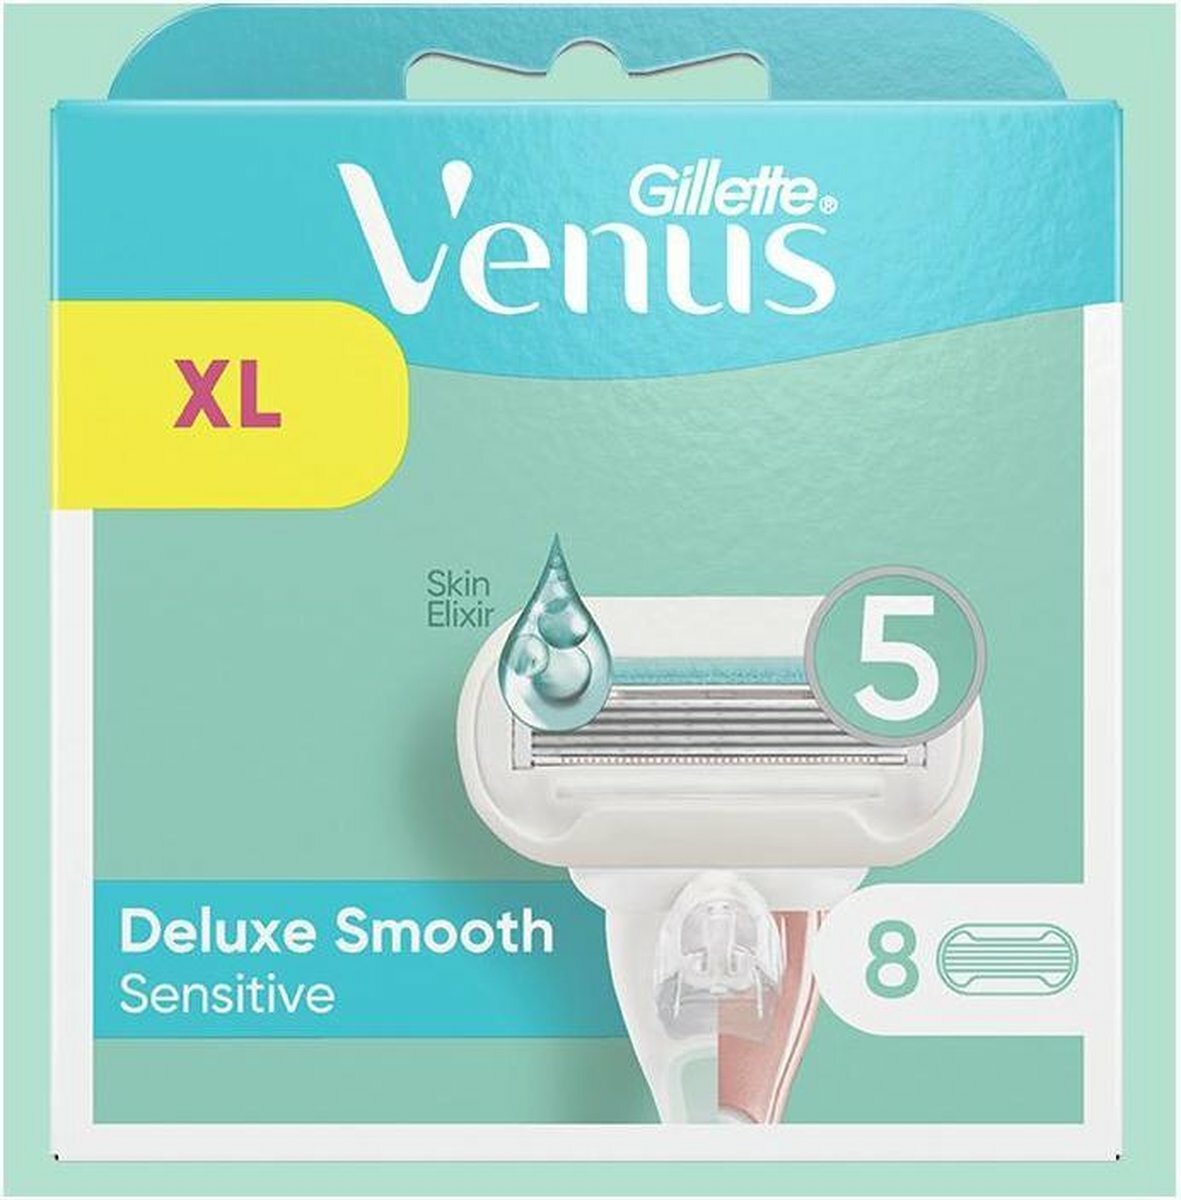 Сменные кассеты Gillette Venus Deluxe Smooth Sensitive Embrace, 8 шт сменные кассеты gillette venus deluxe smooth sensitive embrace 4 шт